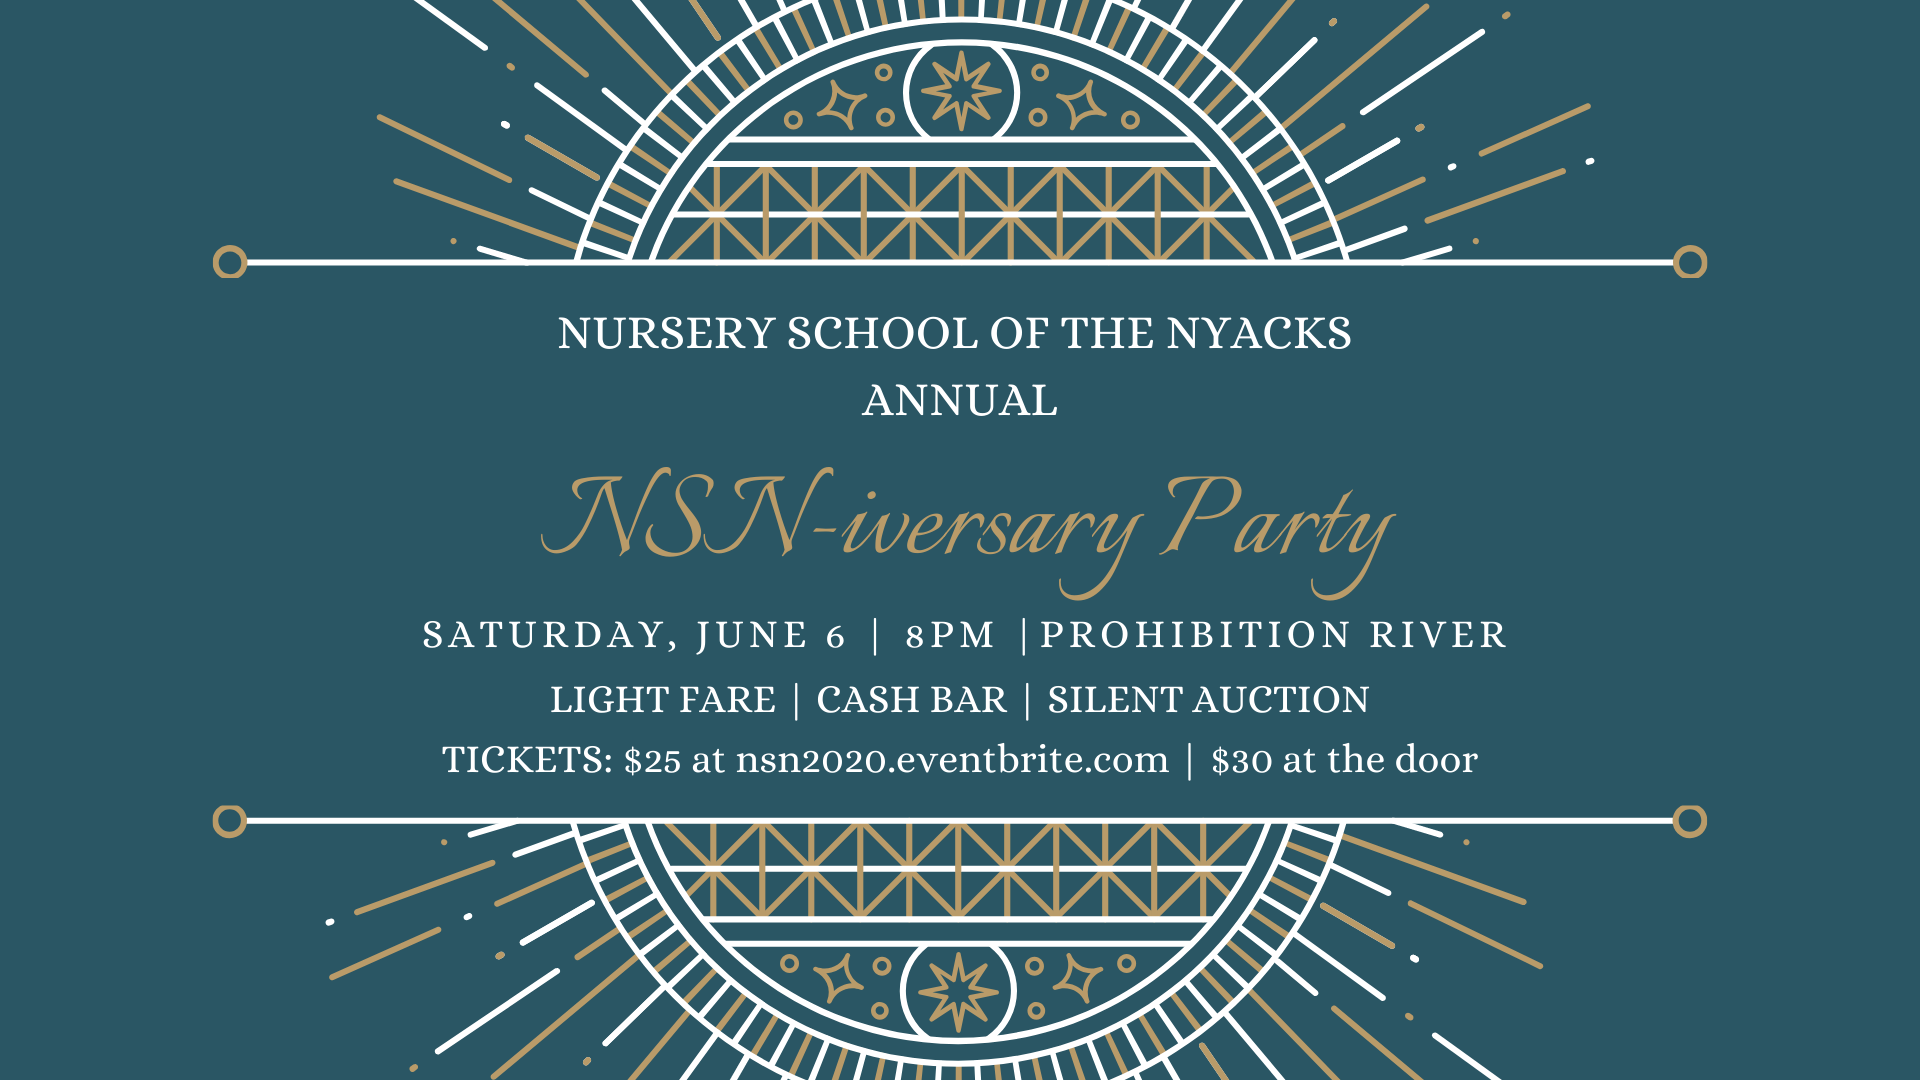 Nursery School of the Nyacks Annual NSN-iversary Party